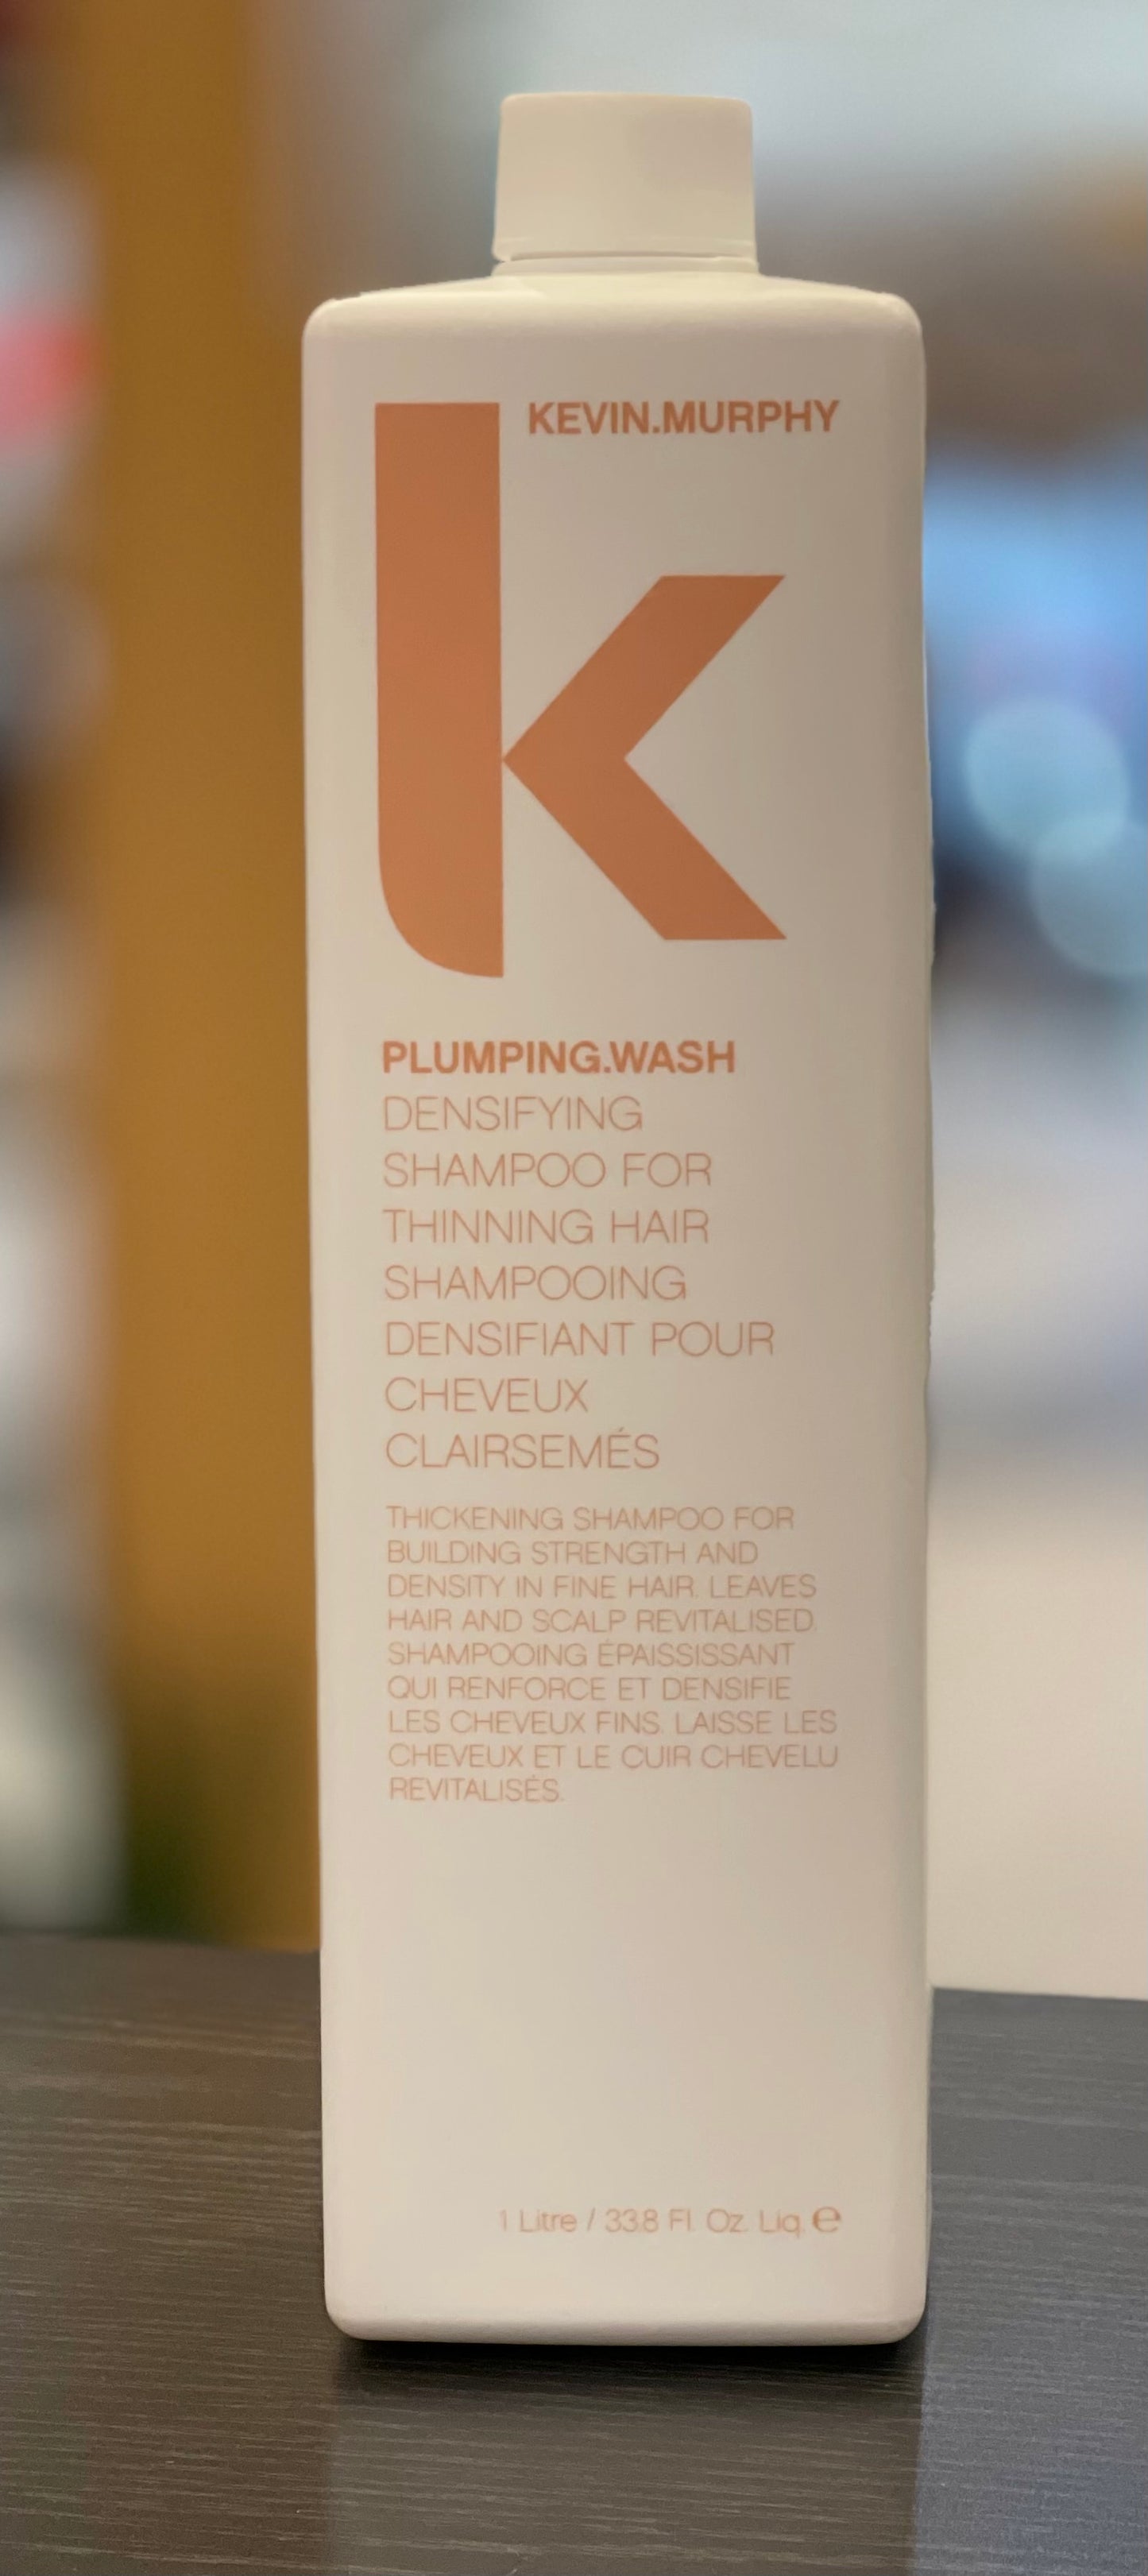 Kevin.Murphy - Plumping.Wash shampoo 33.8 fl. oz. / 1 L